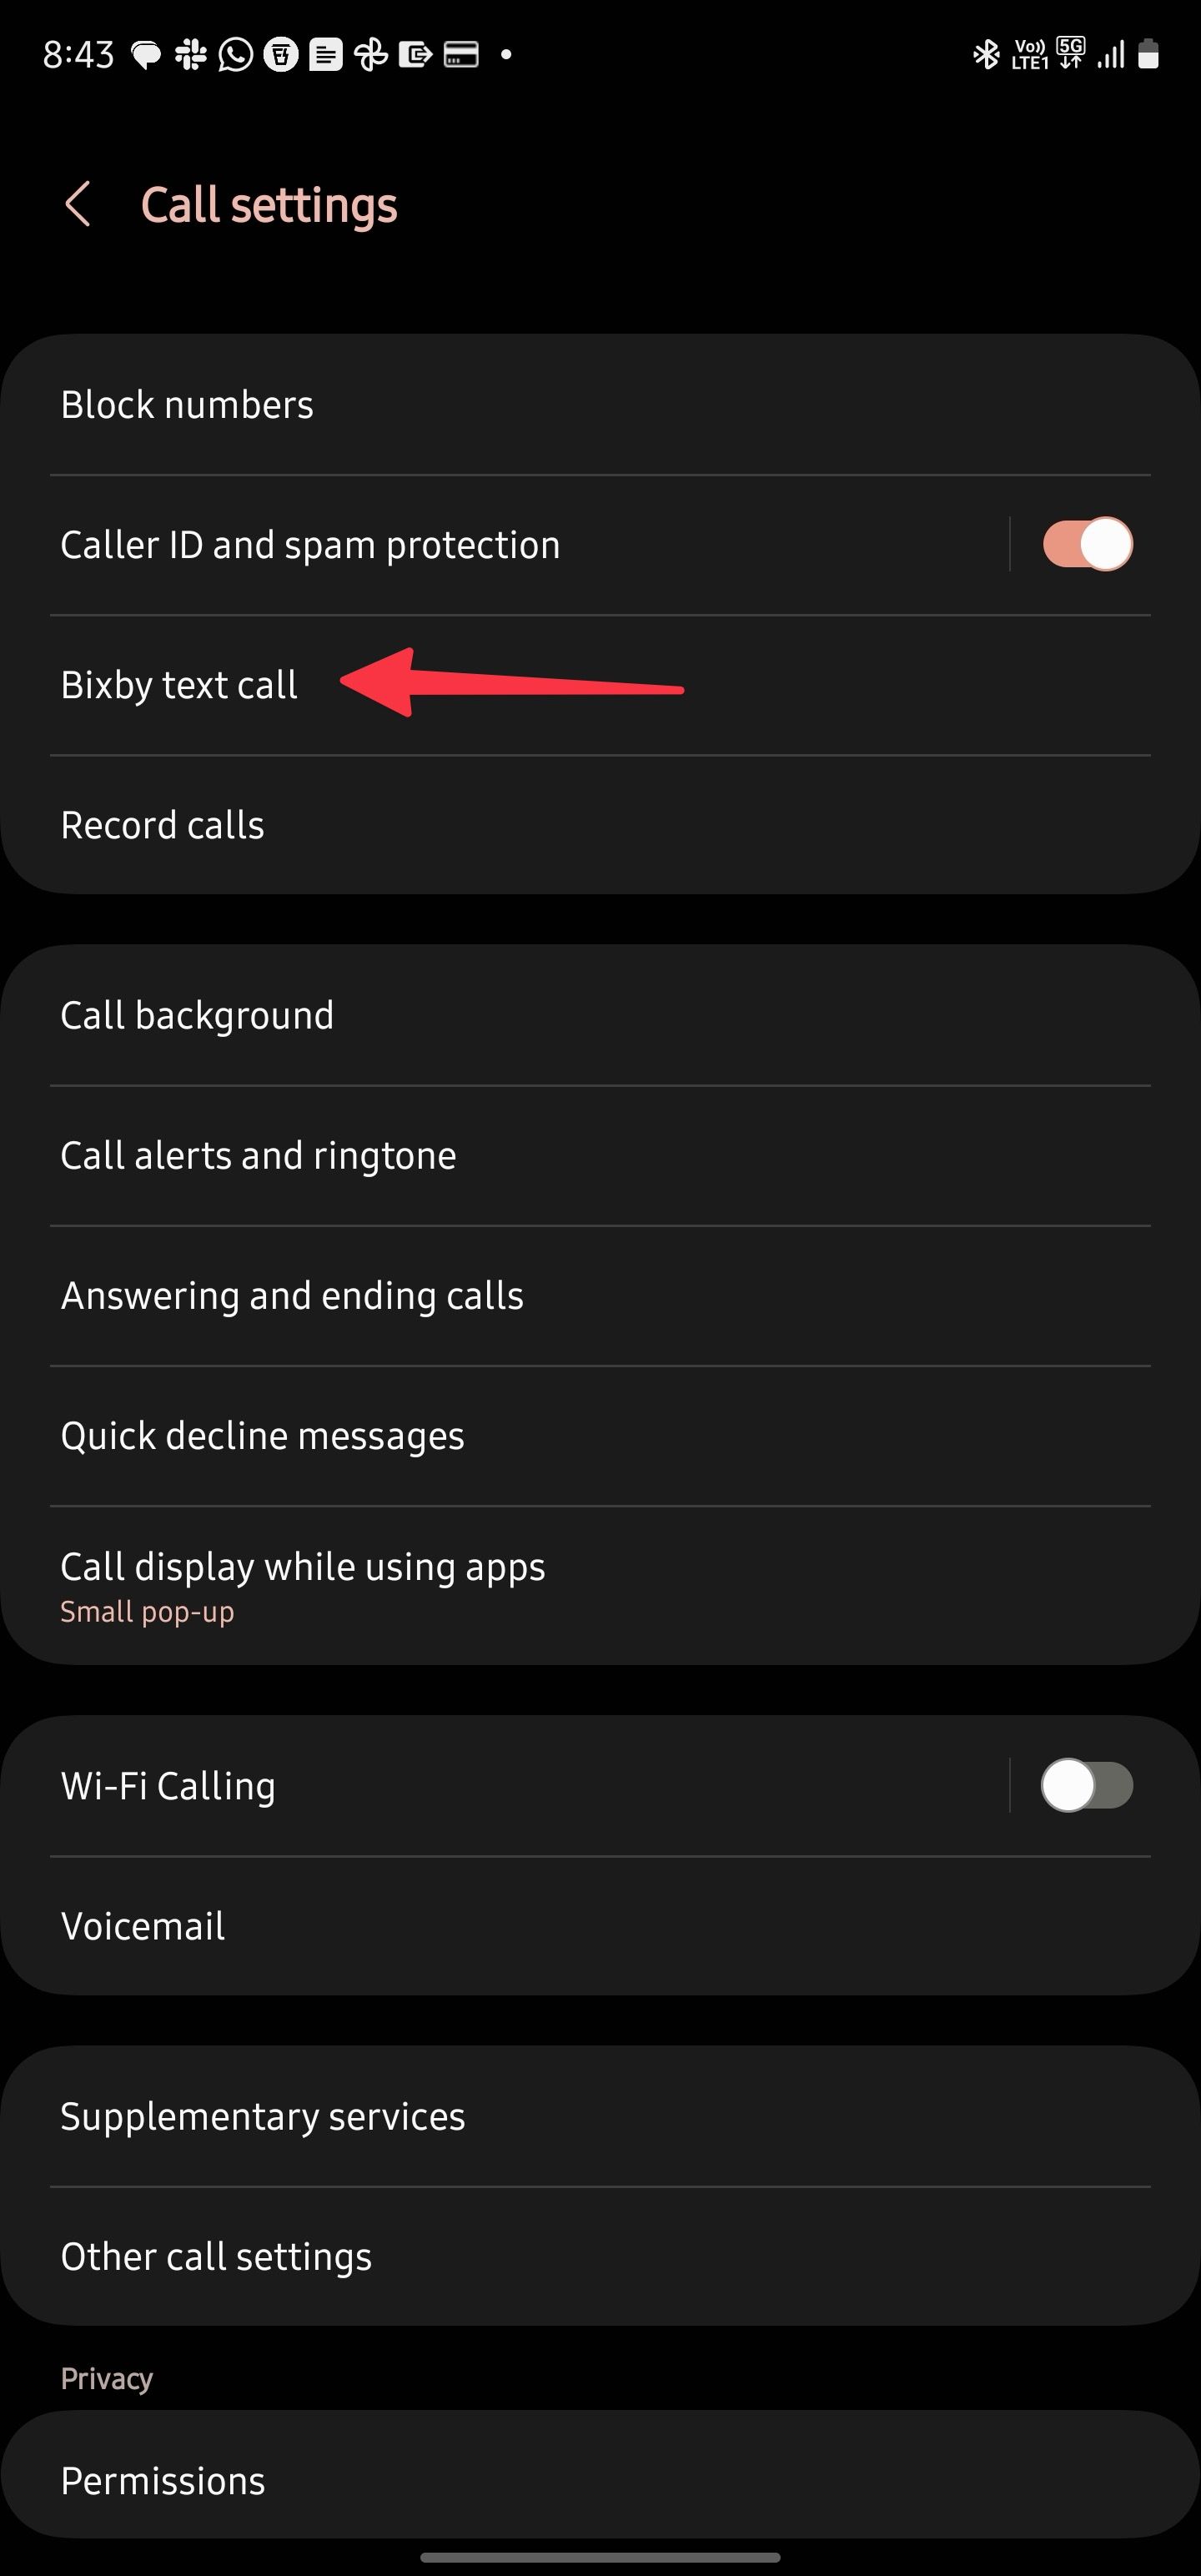 bixby text call on Samsung